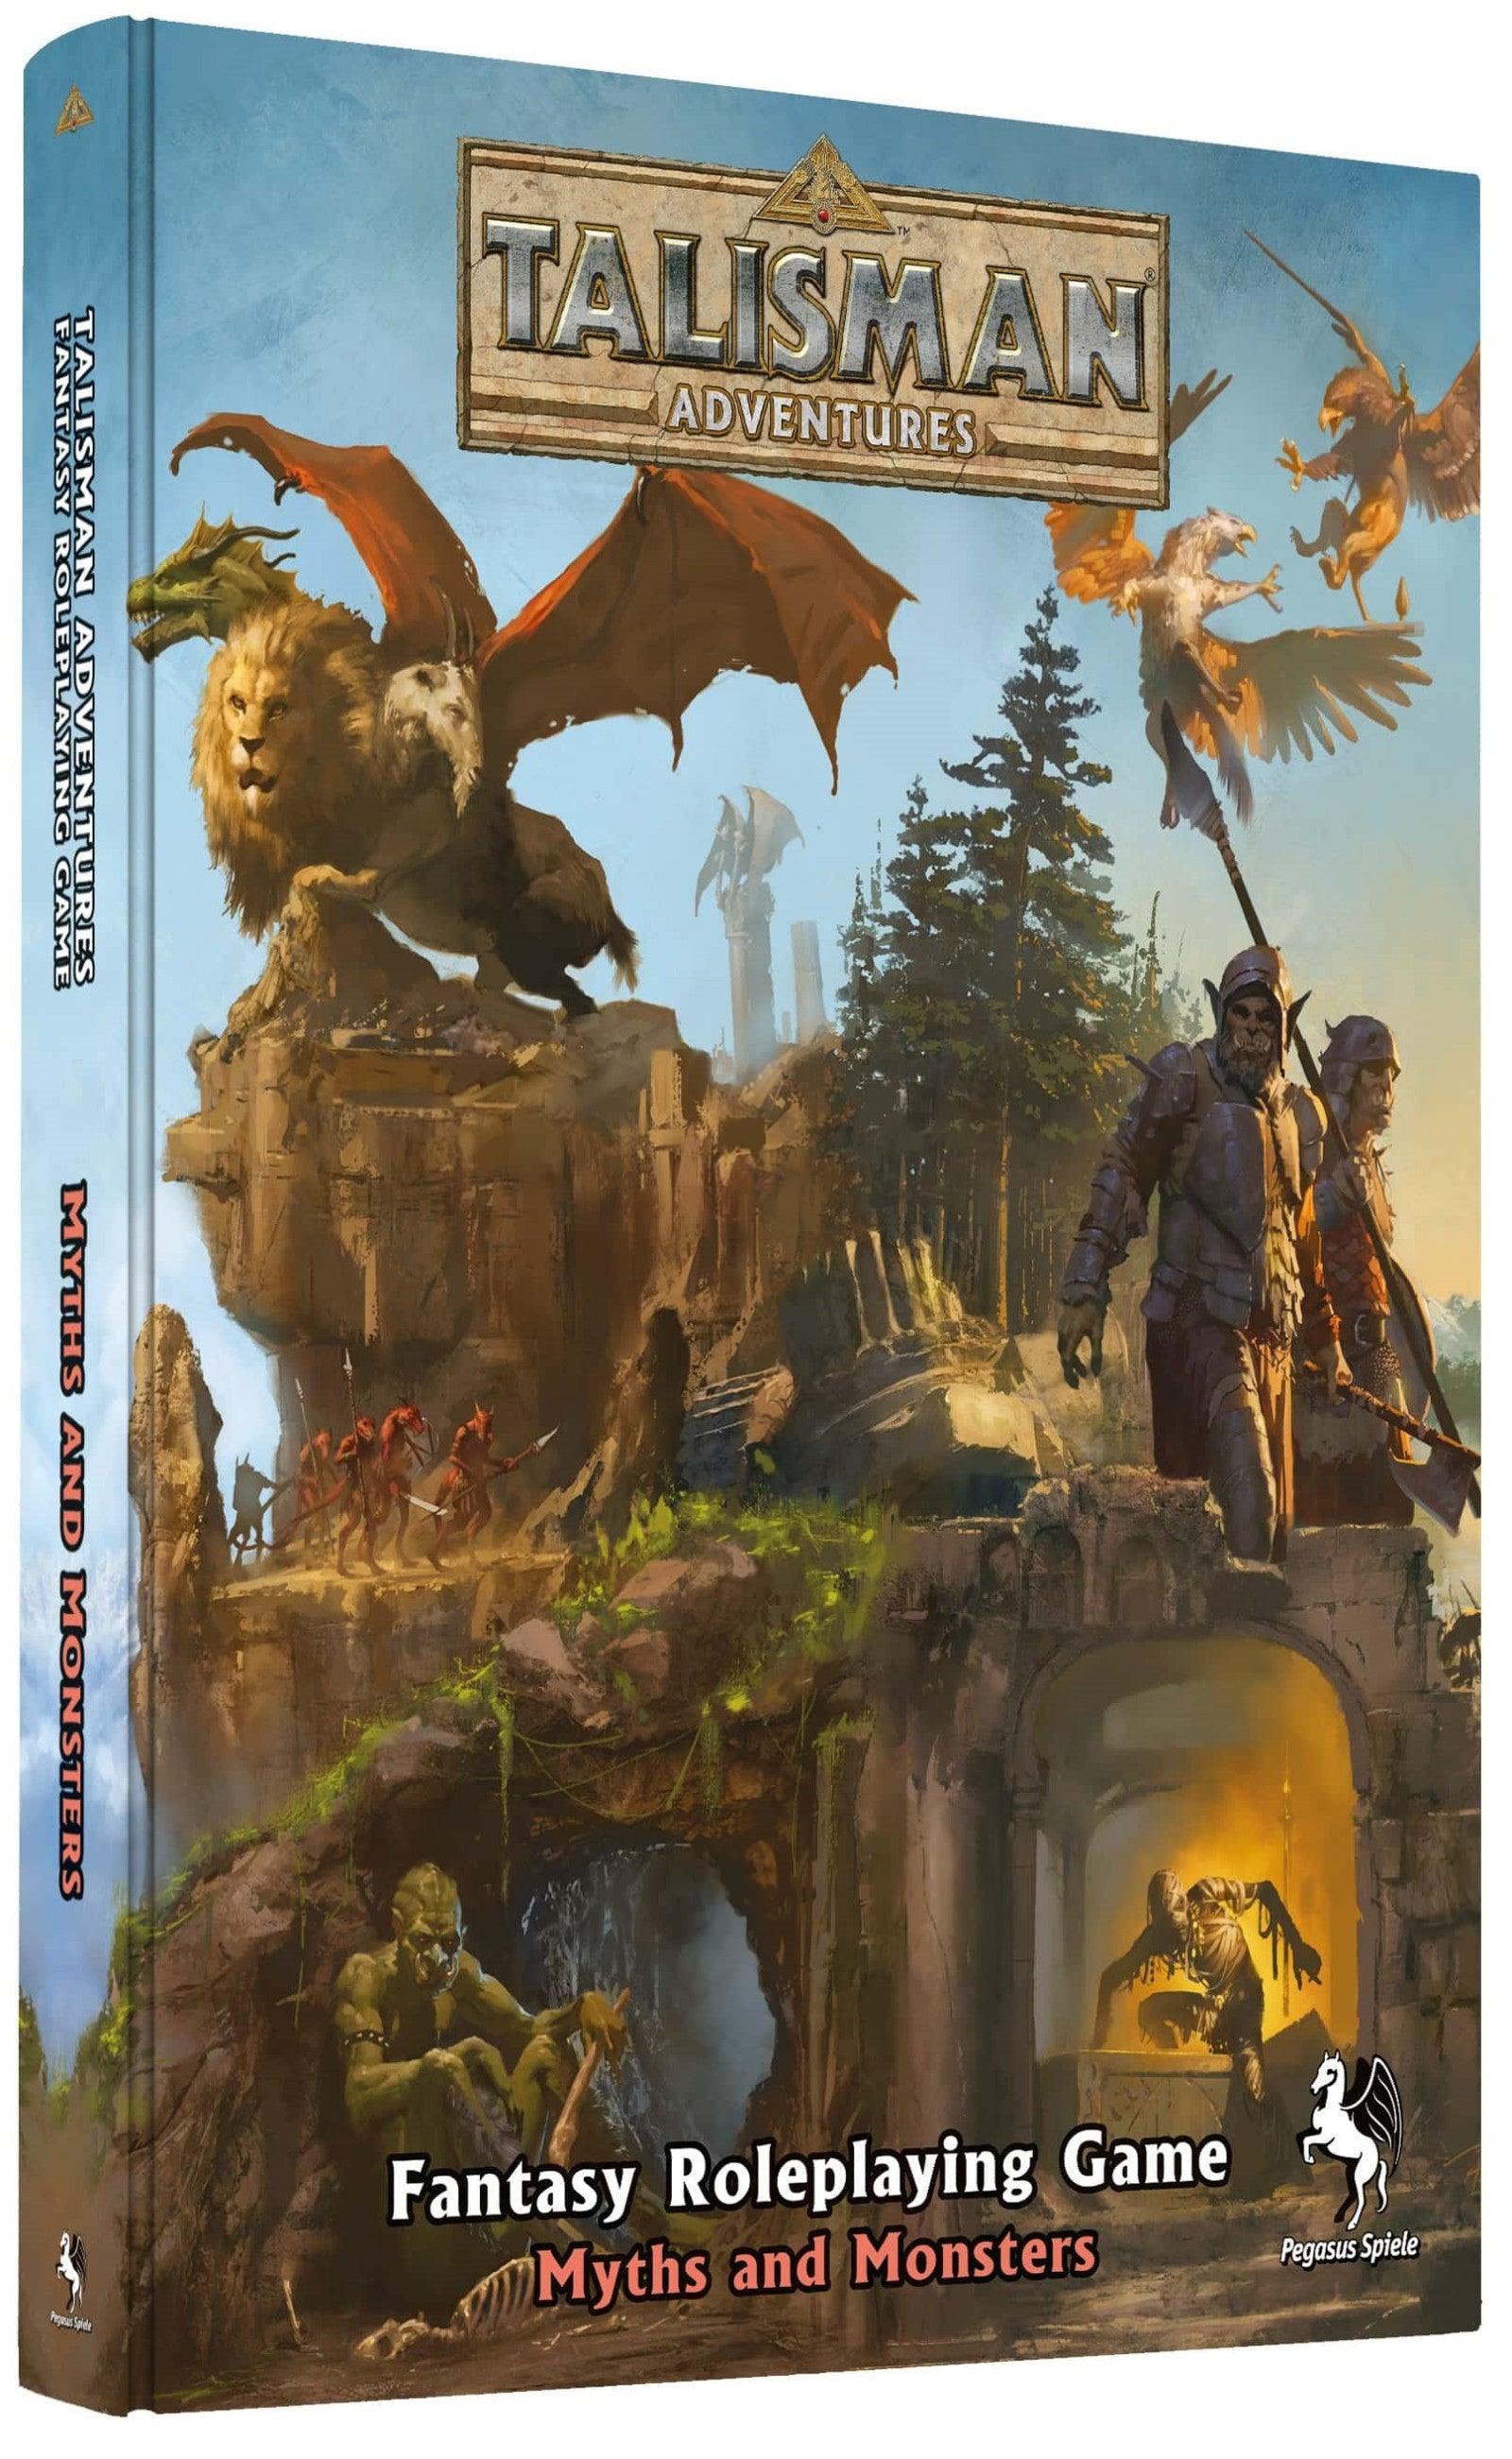 VR-106098 Myths and Monsters Talisman Adventures RPG - Pegasus Spiele - Titan Pop Culture